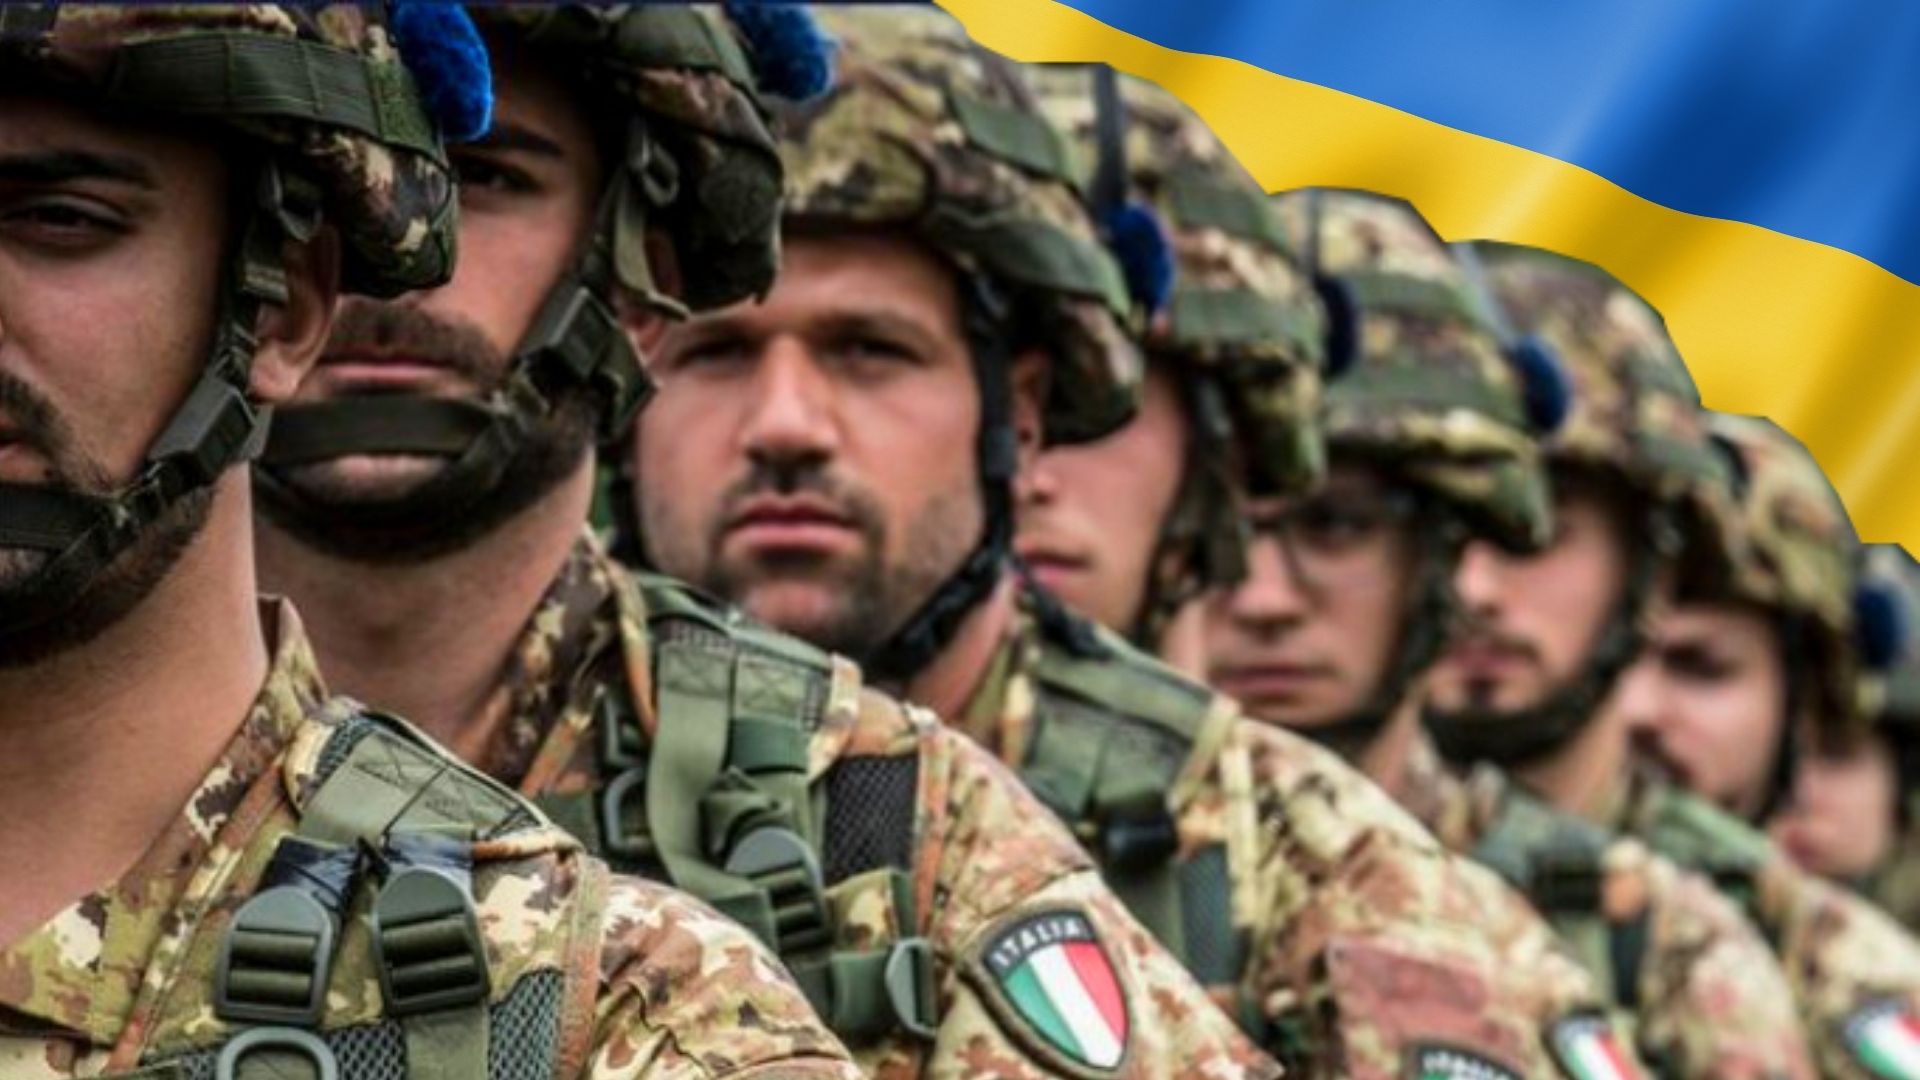 Guerra Italia - Nato in Ucraina